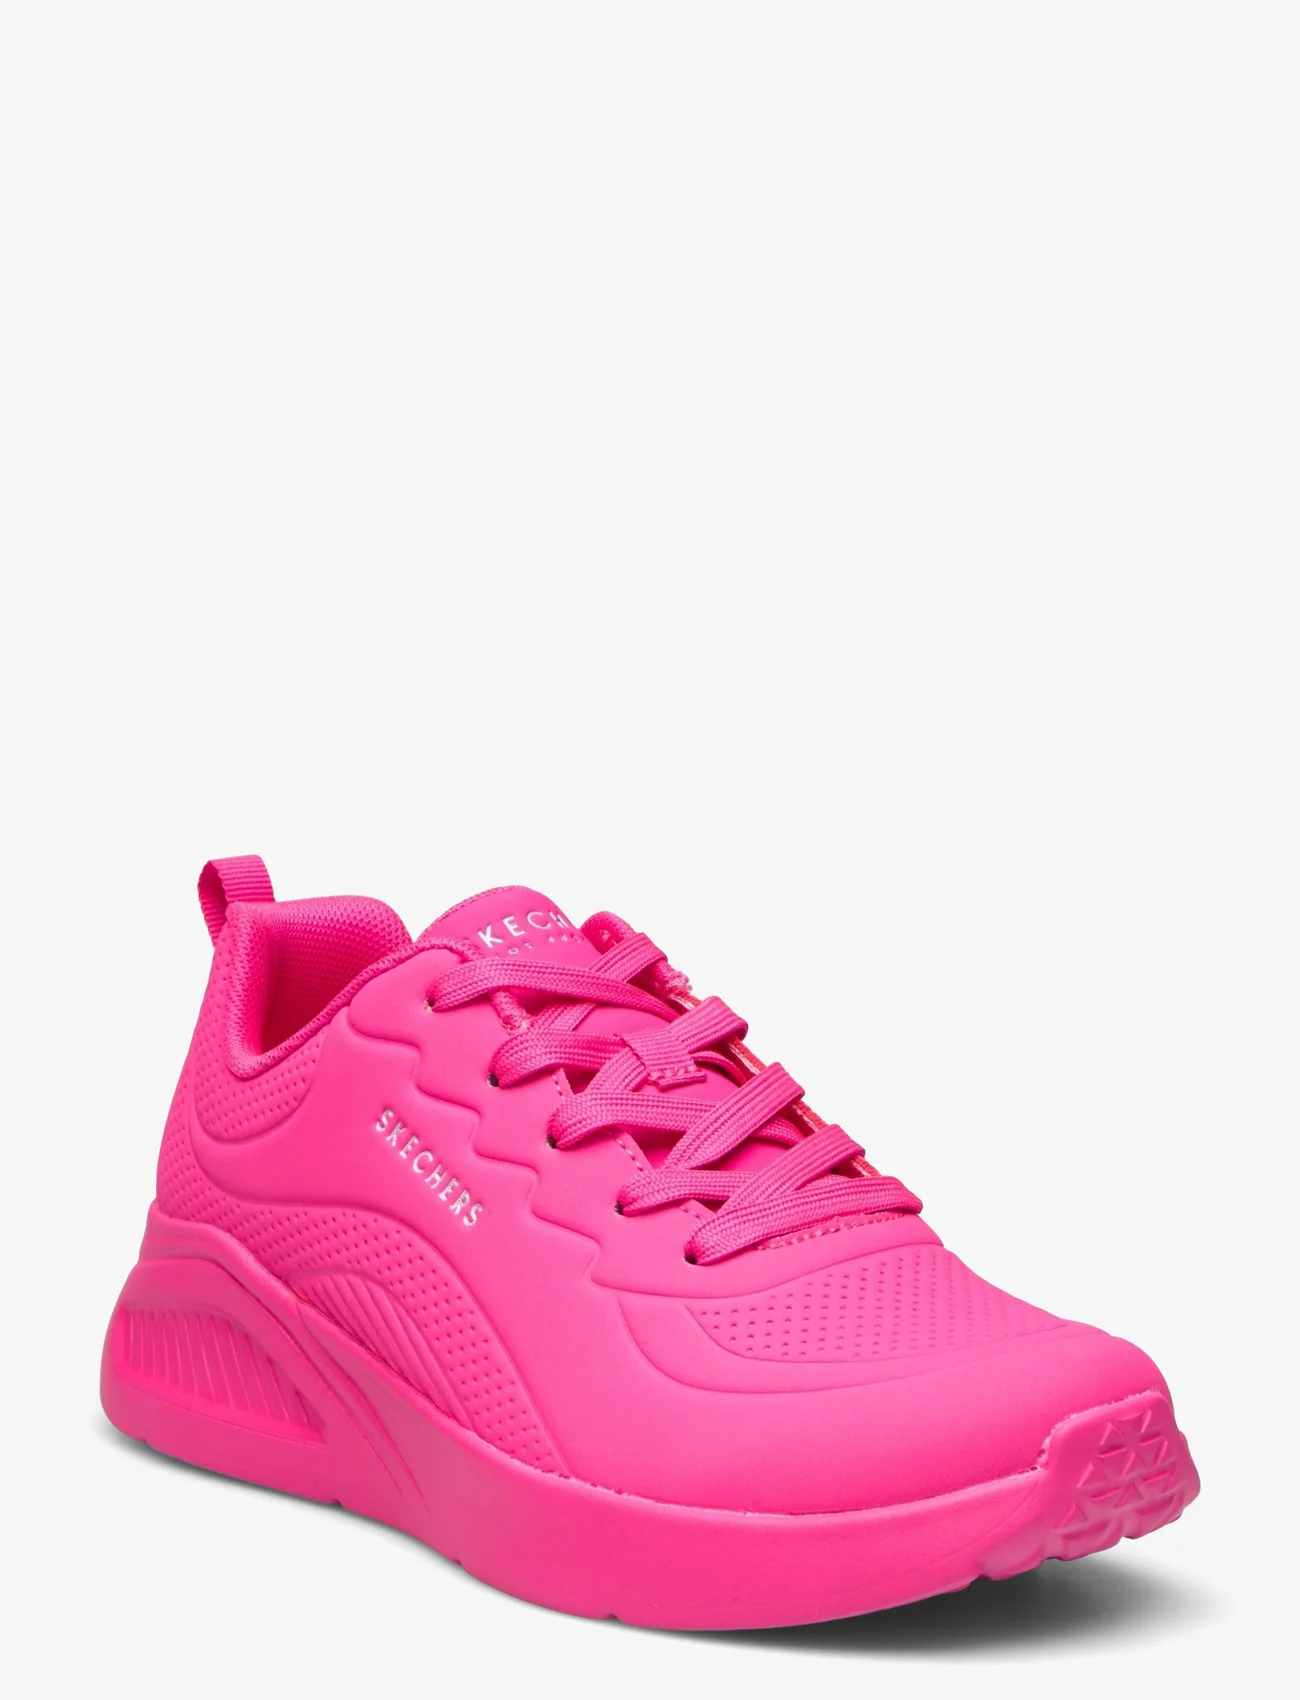 Skechers - Womens Uno Lite - Lighter One - htpk hot pink - 0